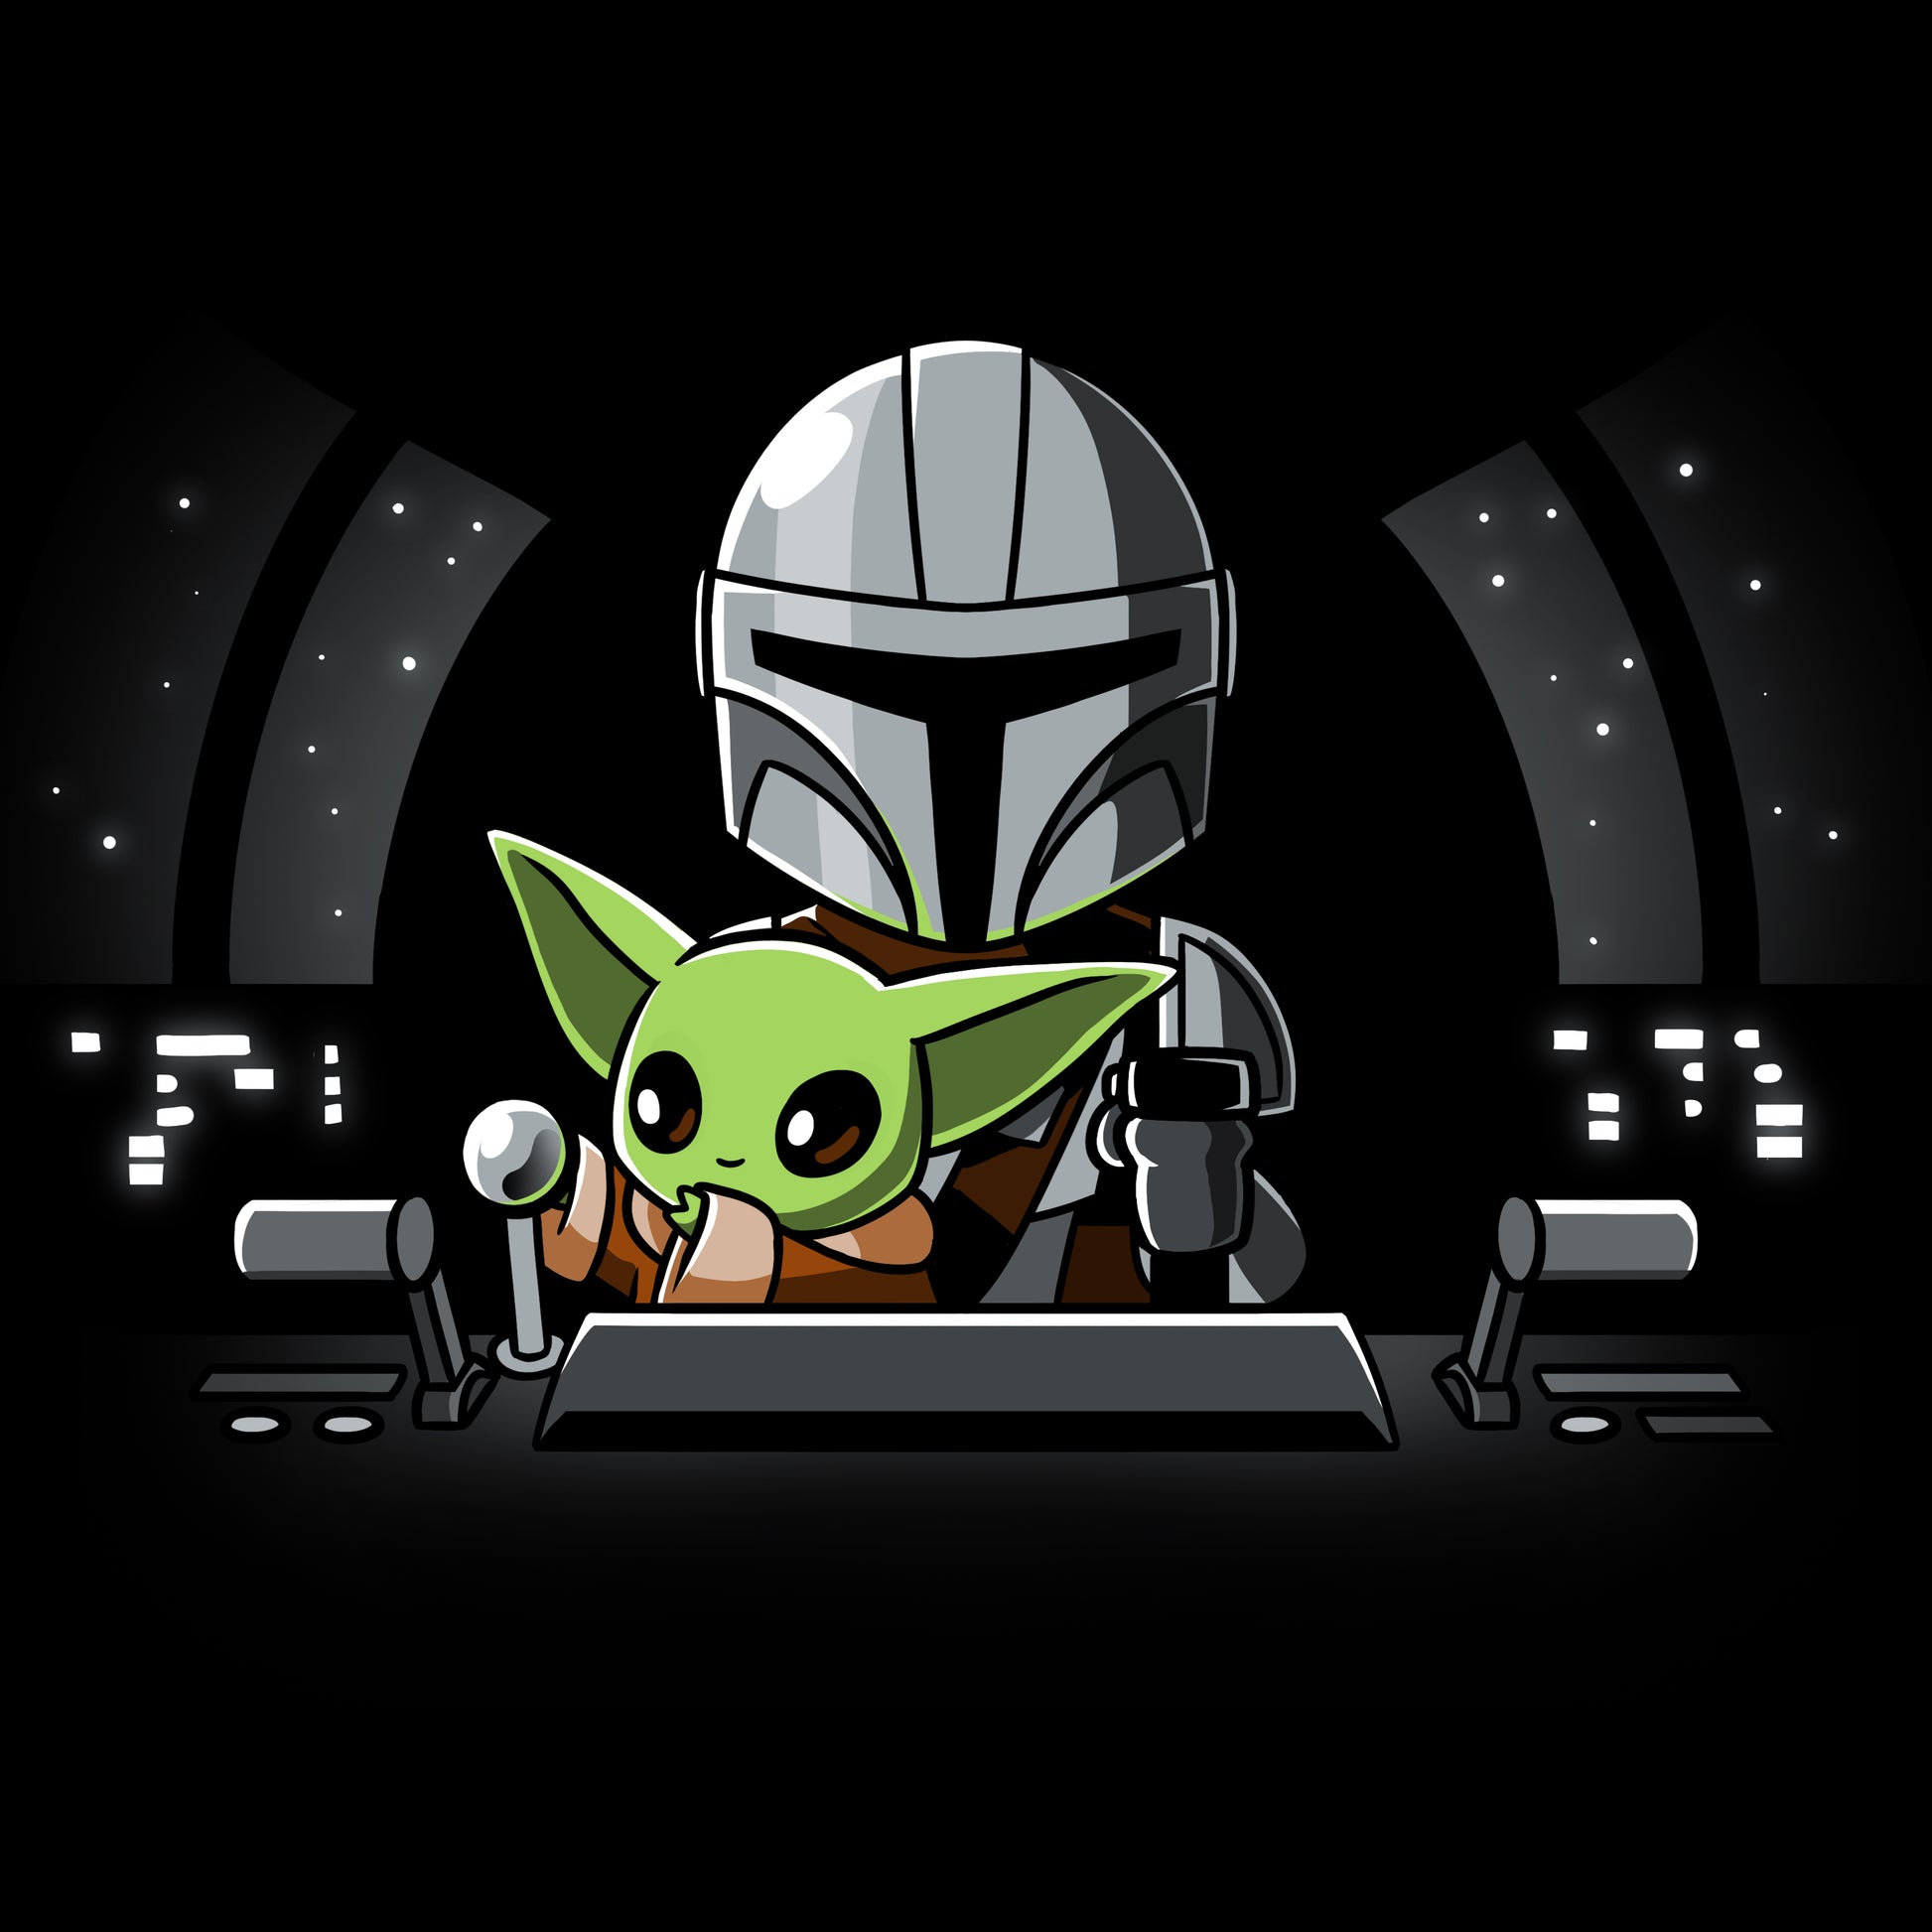 Super Soft Ringspun Cotton Co-Pilot Yoda and Baby Yoda in a Cockpit. (Star Wars)